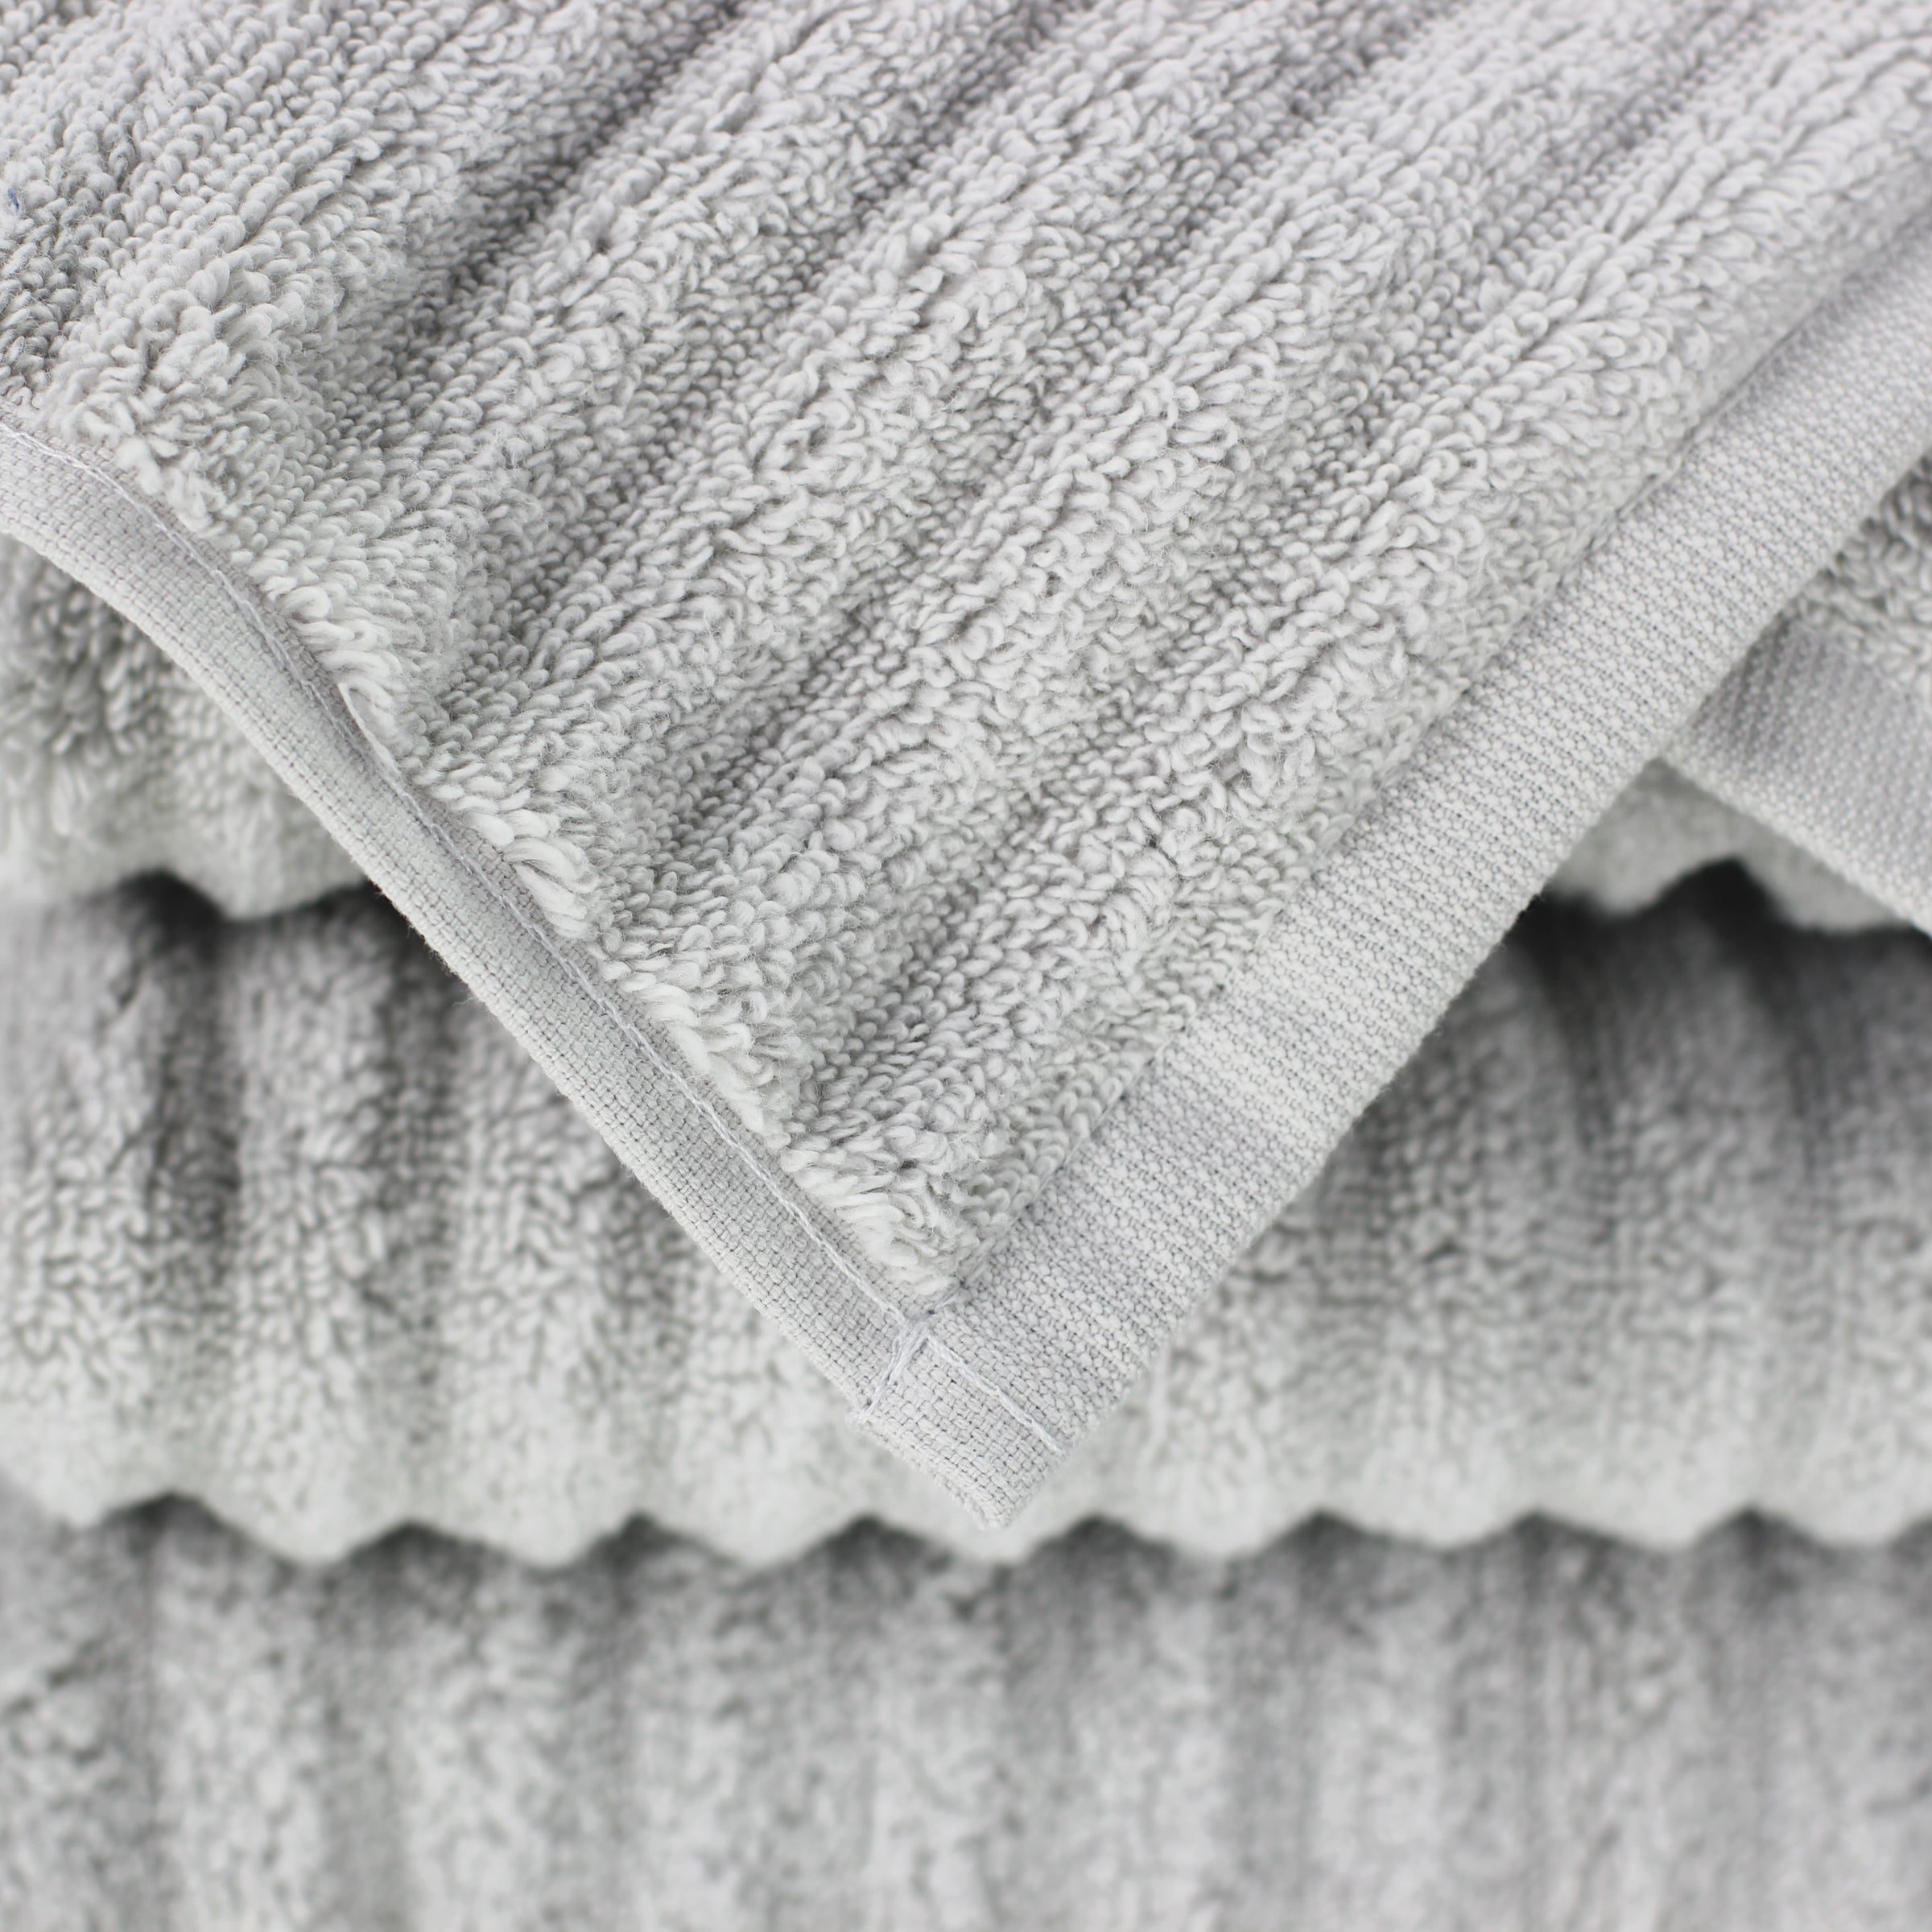 American Soft Linen 100% Turkish Cotton 6 Piece Towel Set - Gray